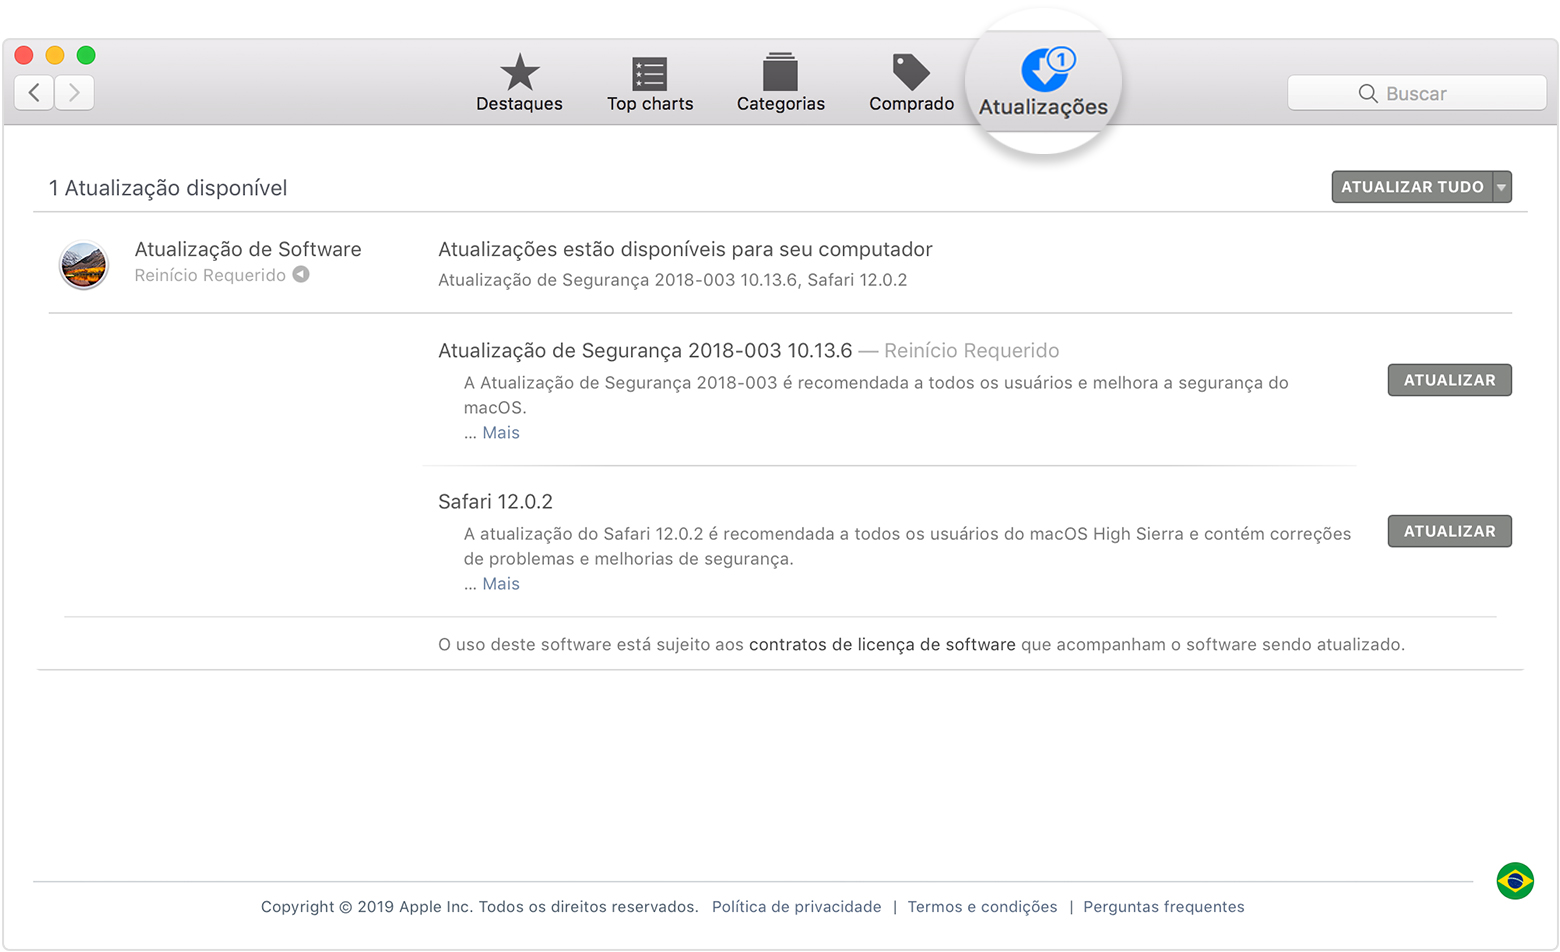 mac app store dmg